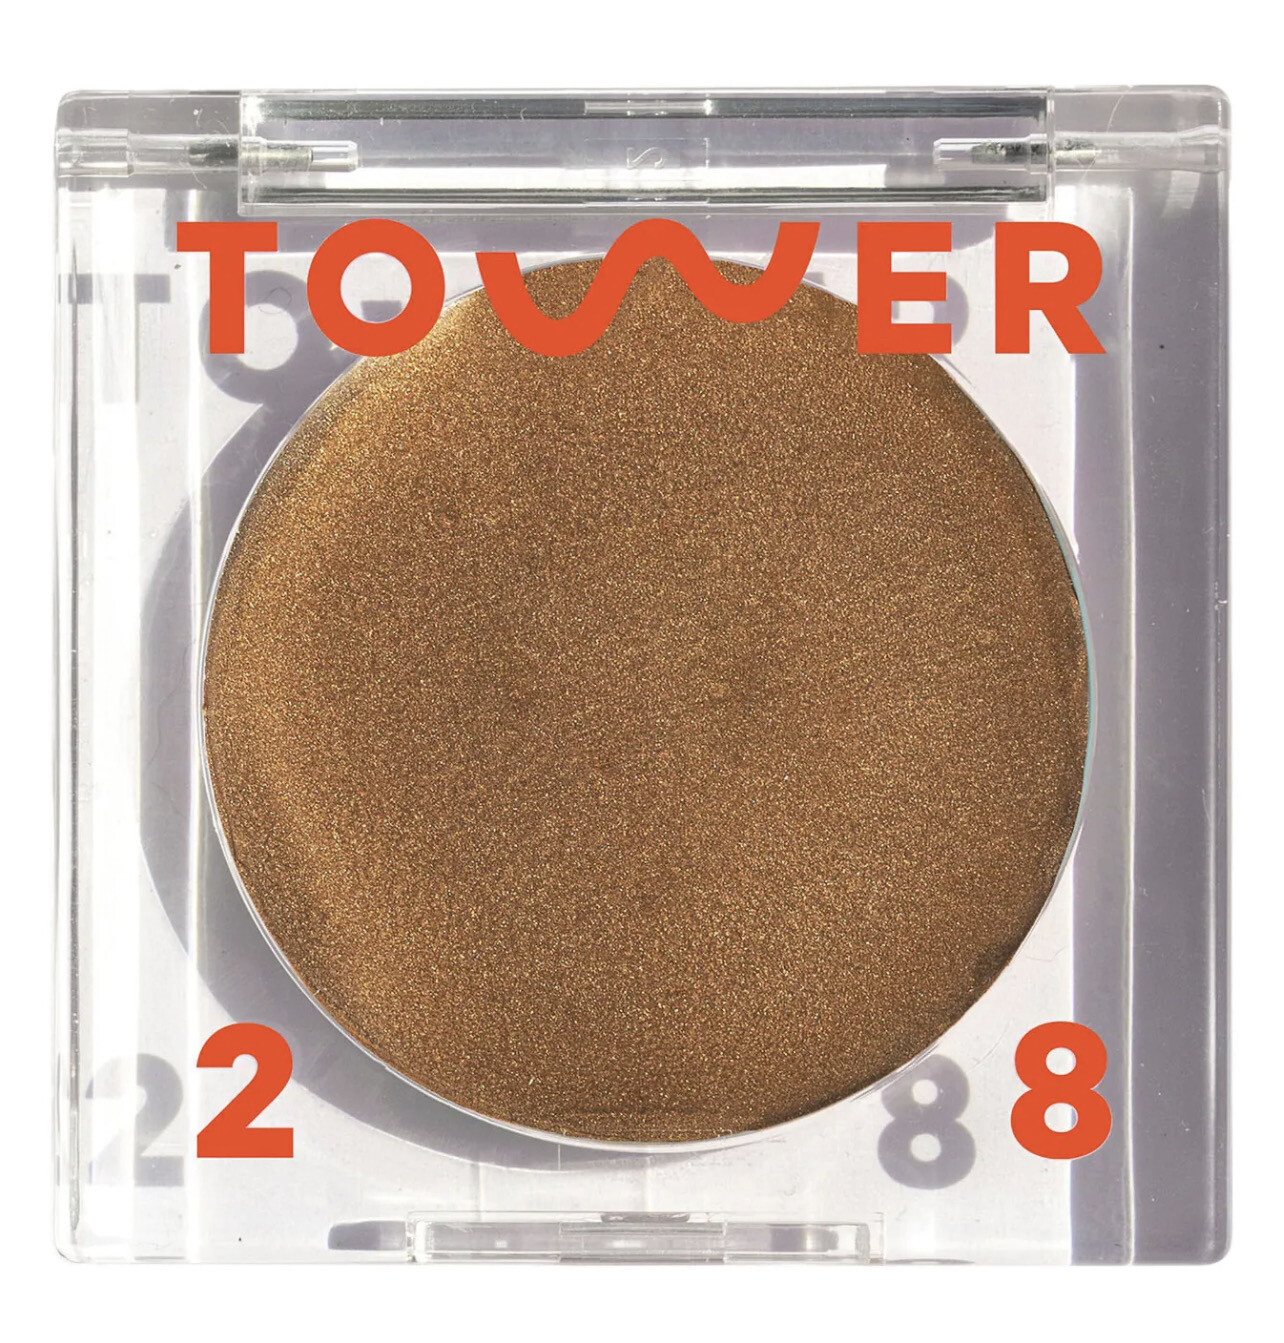 Tower 28 - Bronzino Illuminating Cream Bronzer | Gold Coast - medium neutral bronze